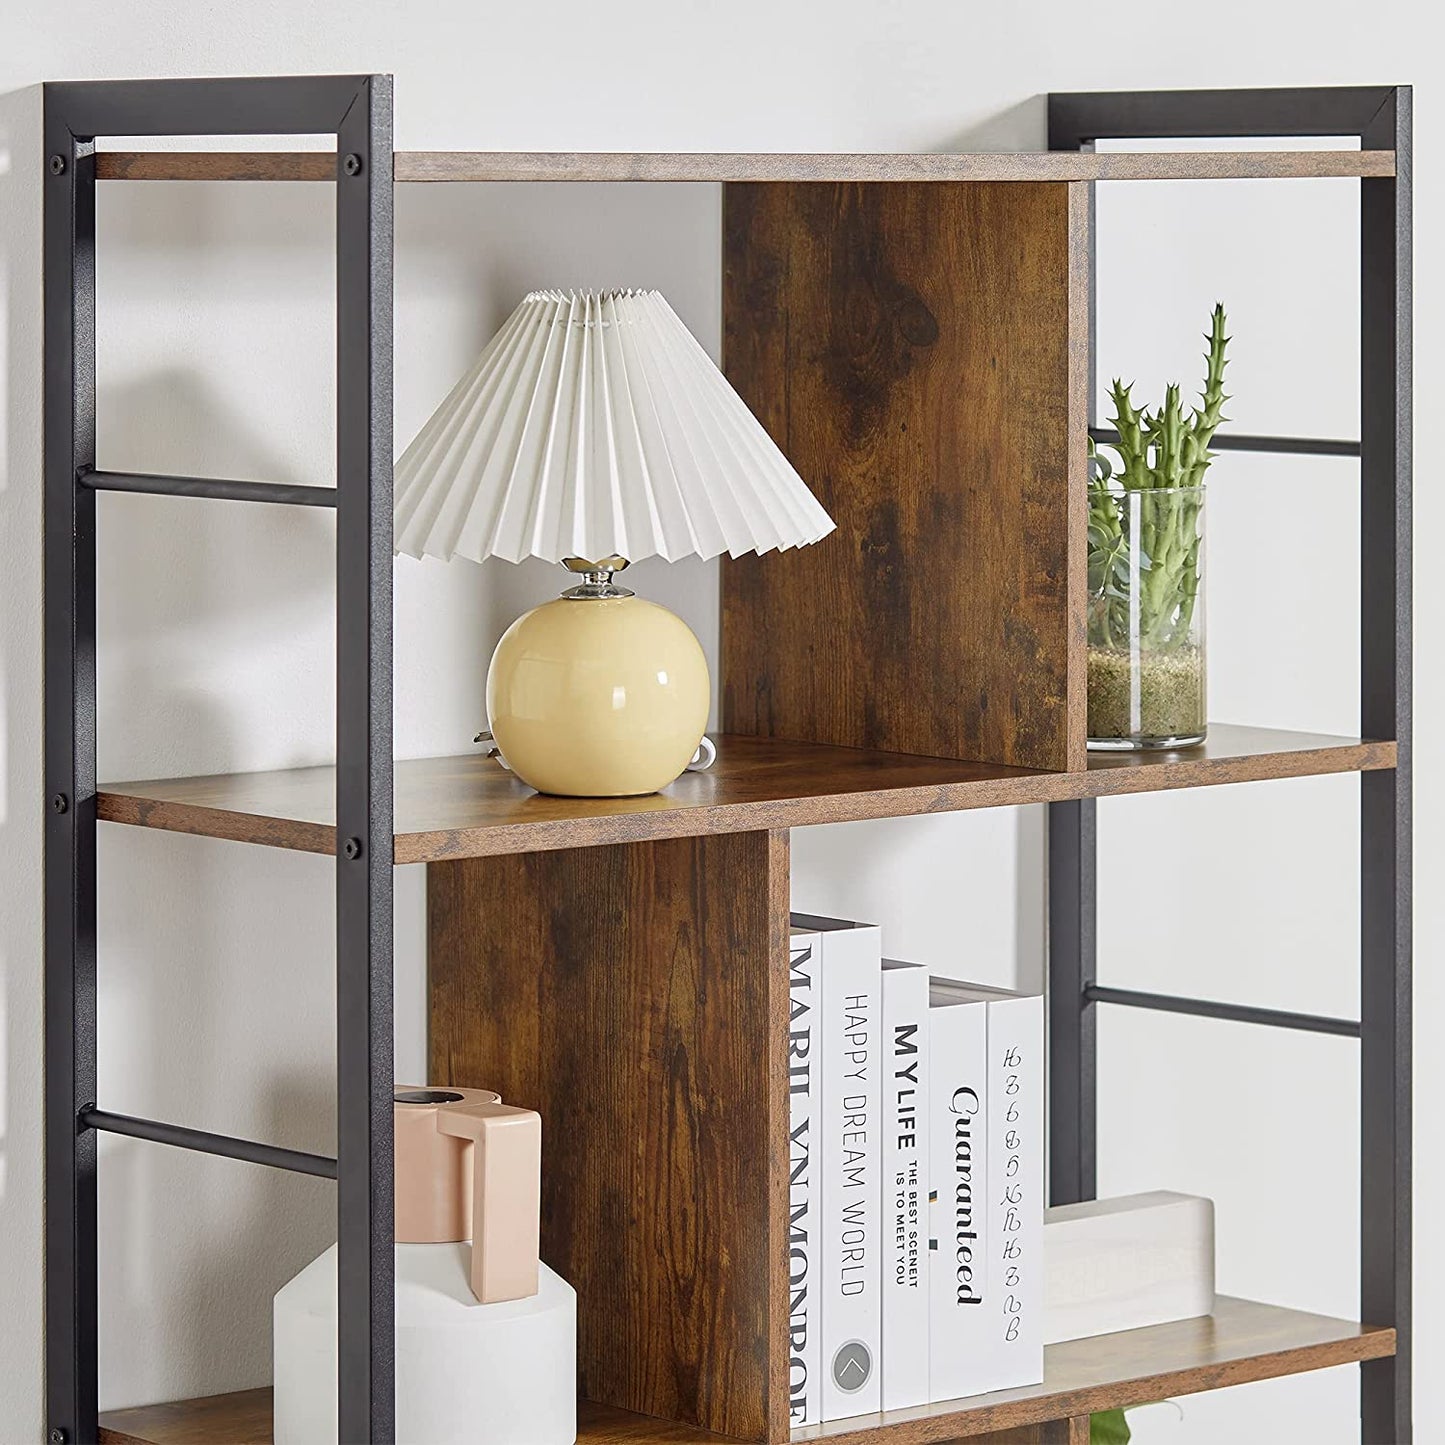 Industrial/ Rustic Floor Standing Bookcase with 5 Tiers,